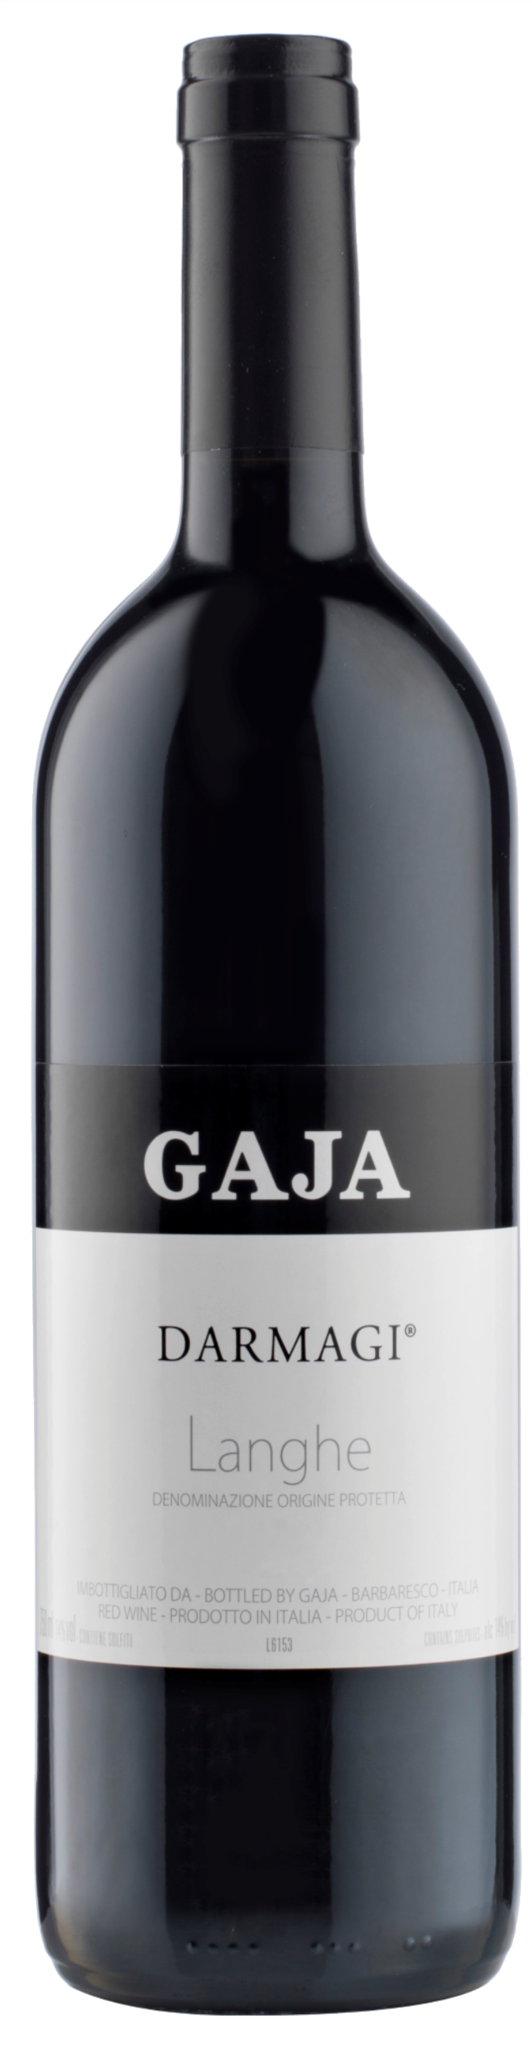 Gaja Darmagi Cabernet Sauvignon 2016 wine bottle